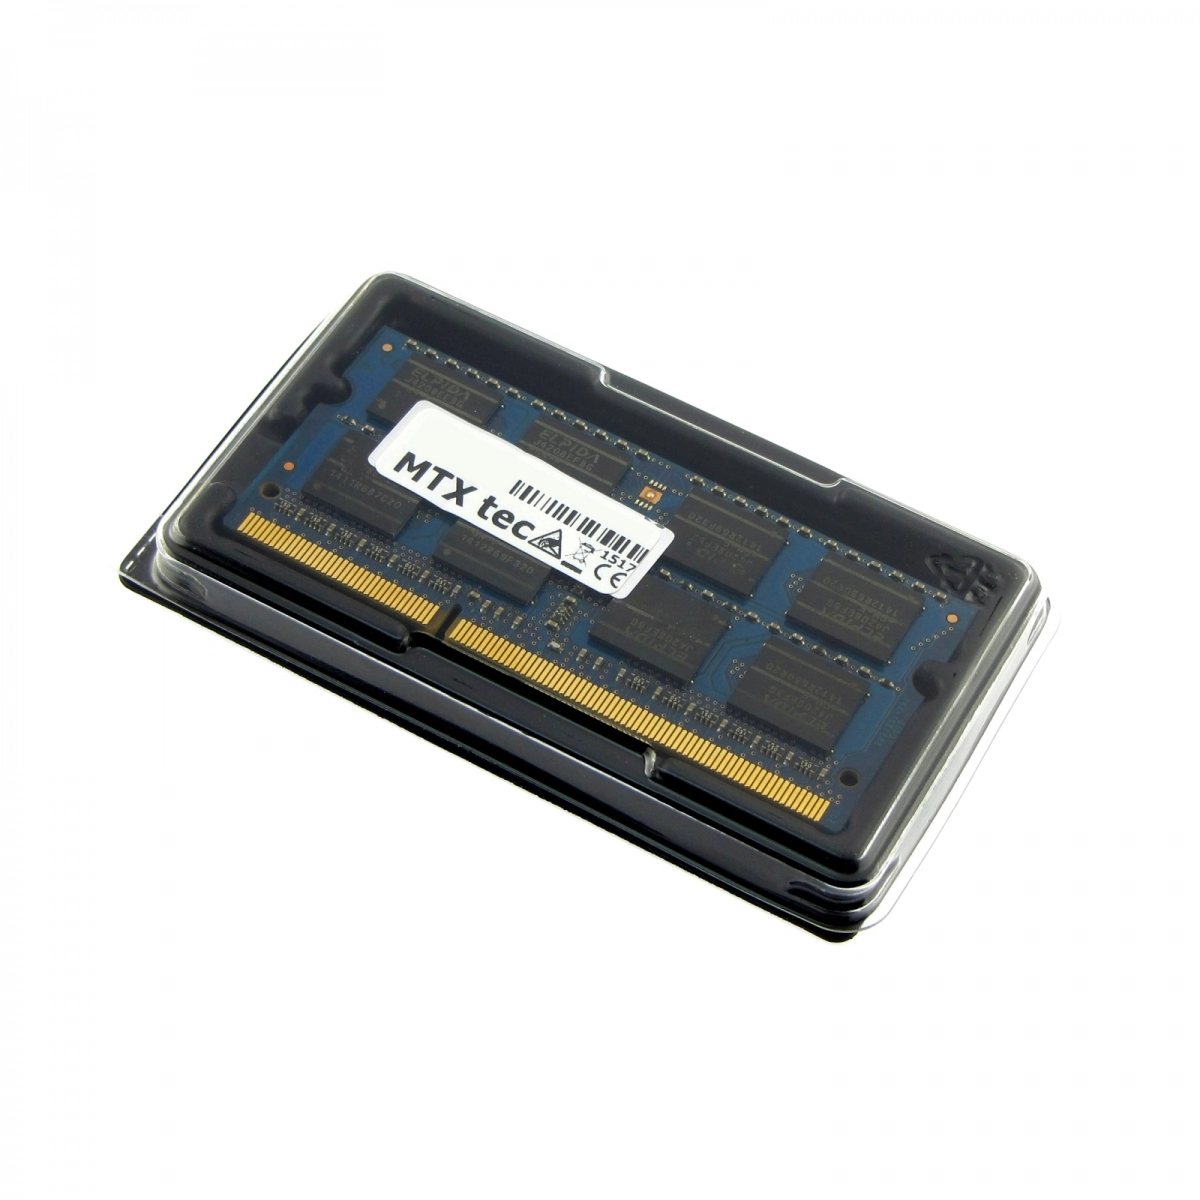 MTXtec Arbeitsspeicher 8 GB RAM für LENOVO ThinkPad L430